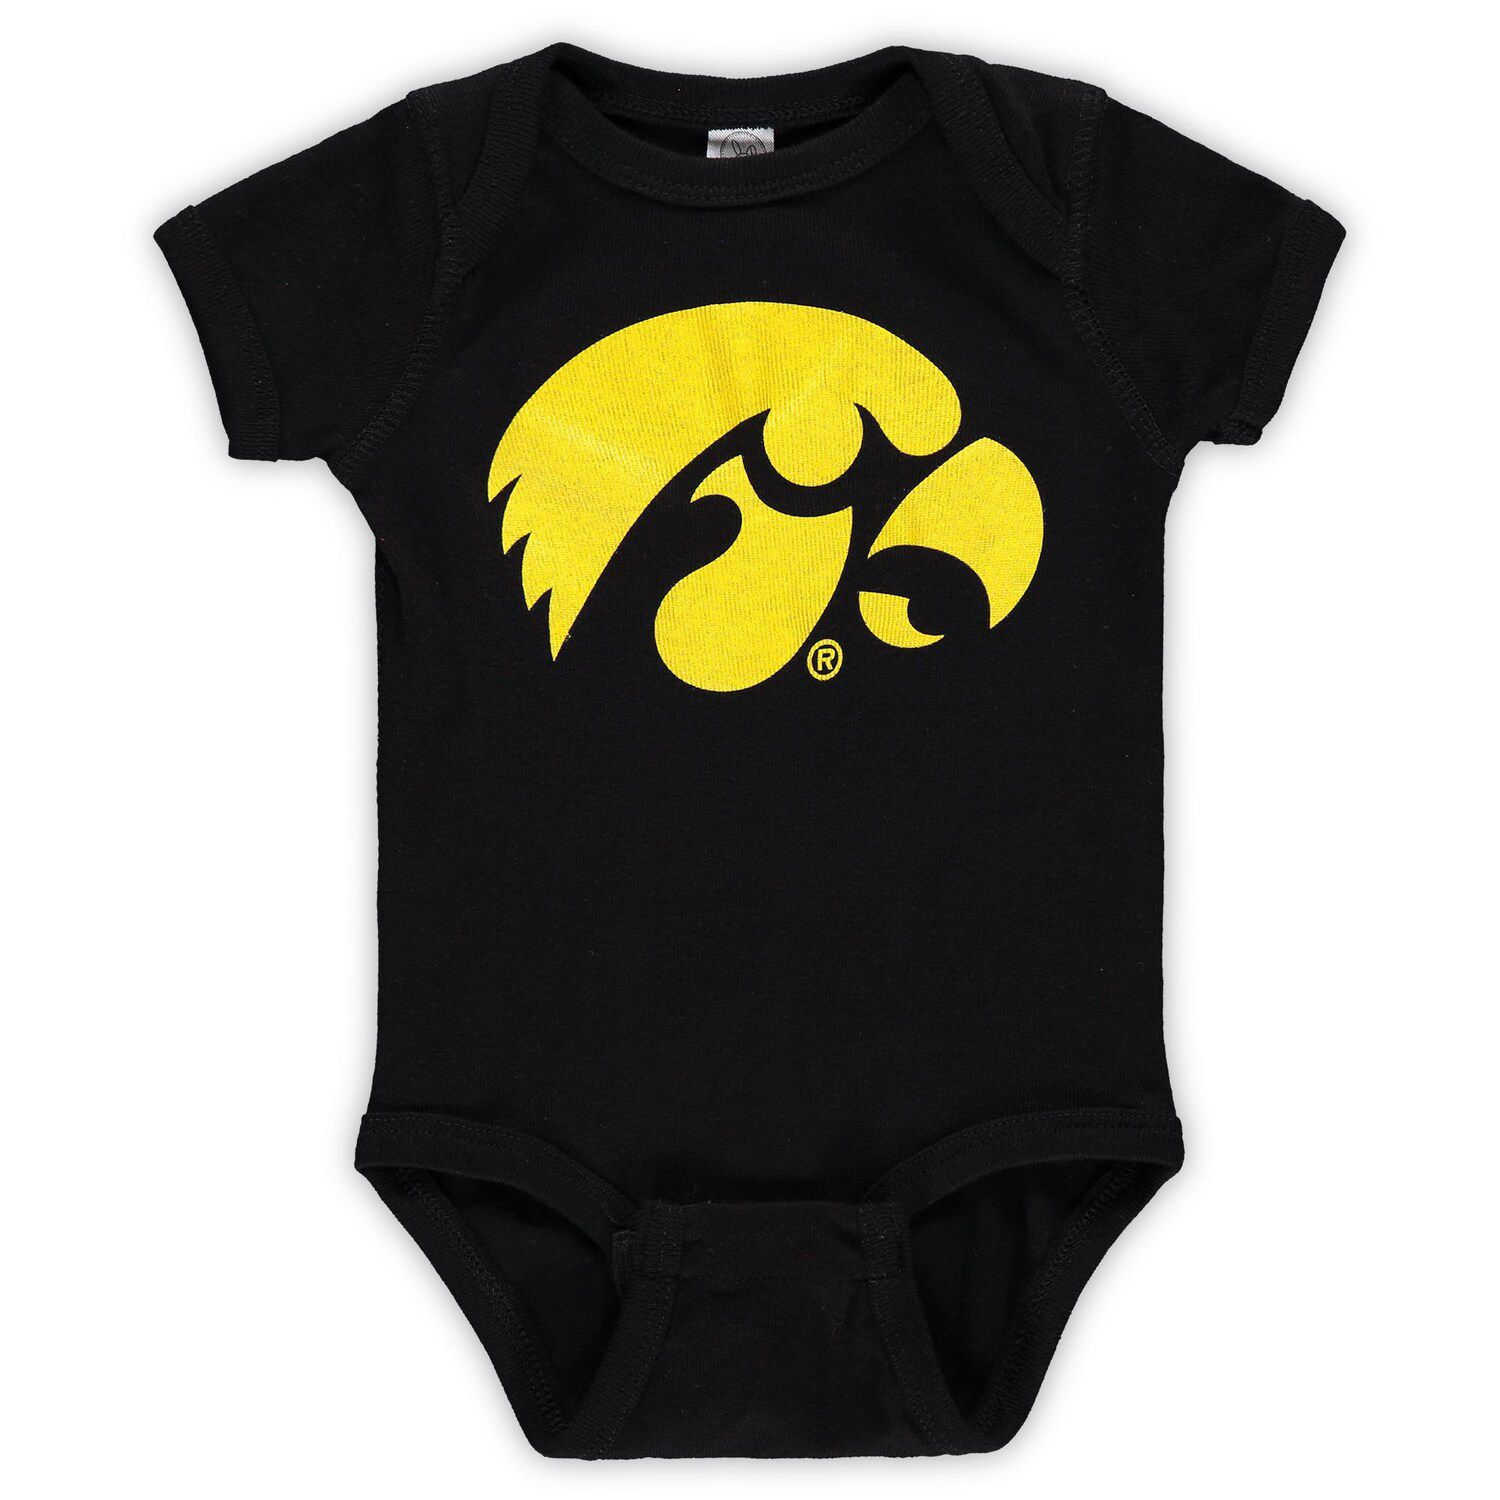 Image for Unbranded Infant Black Iowa Hawkeyes Big Logo Bodysuit at Kohl's.